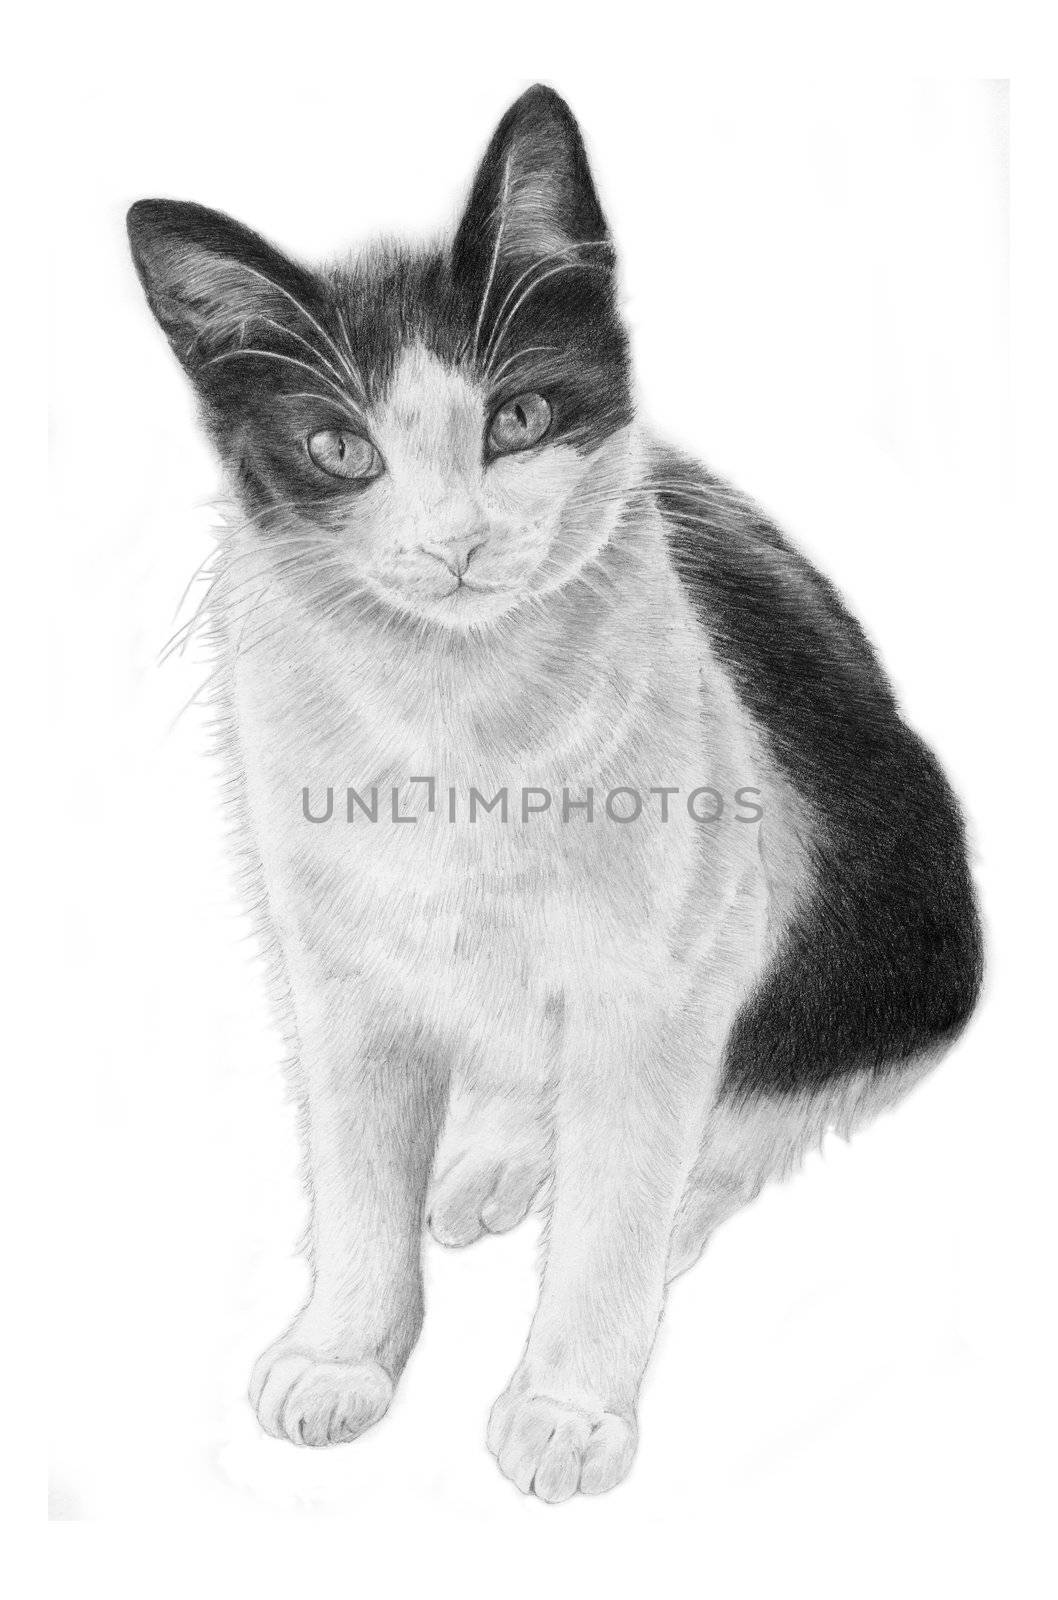 Black and White Cat, Illustration by Morphart